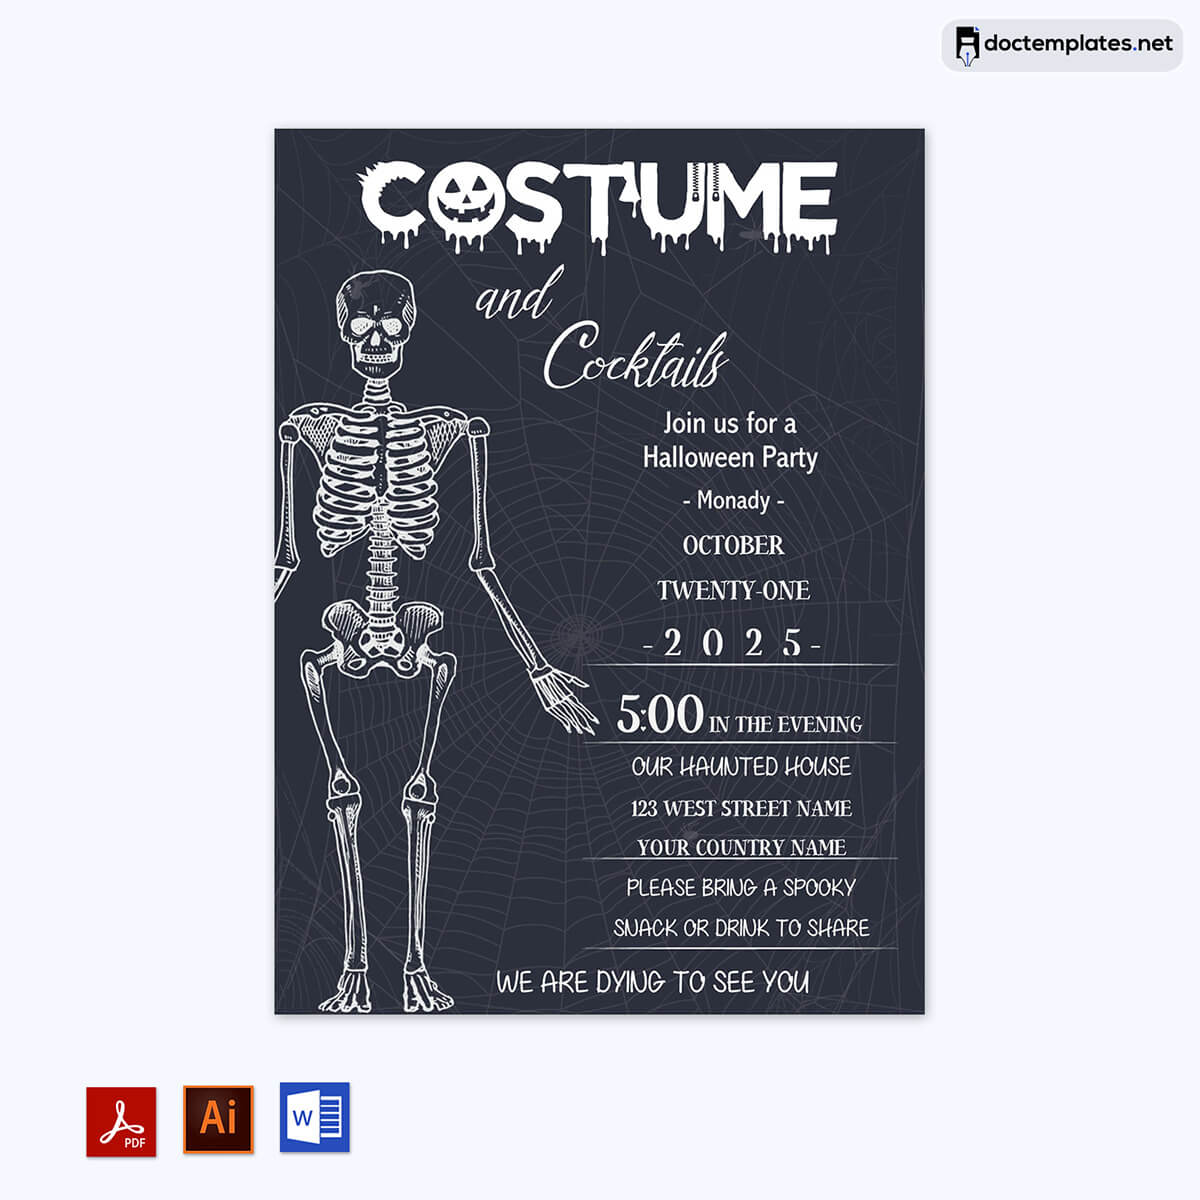  costume party invitation templates free